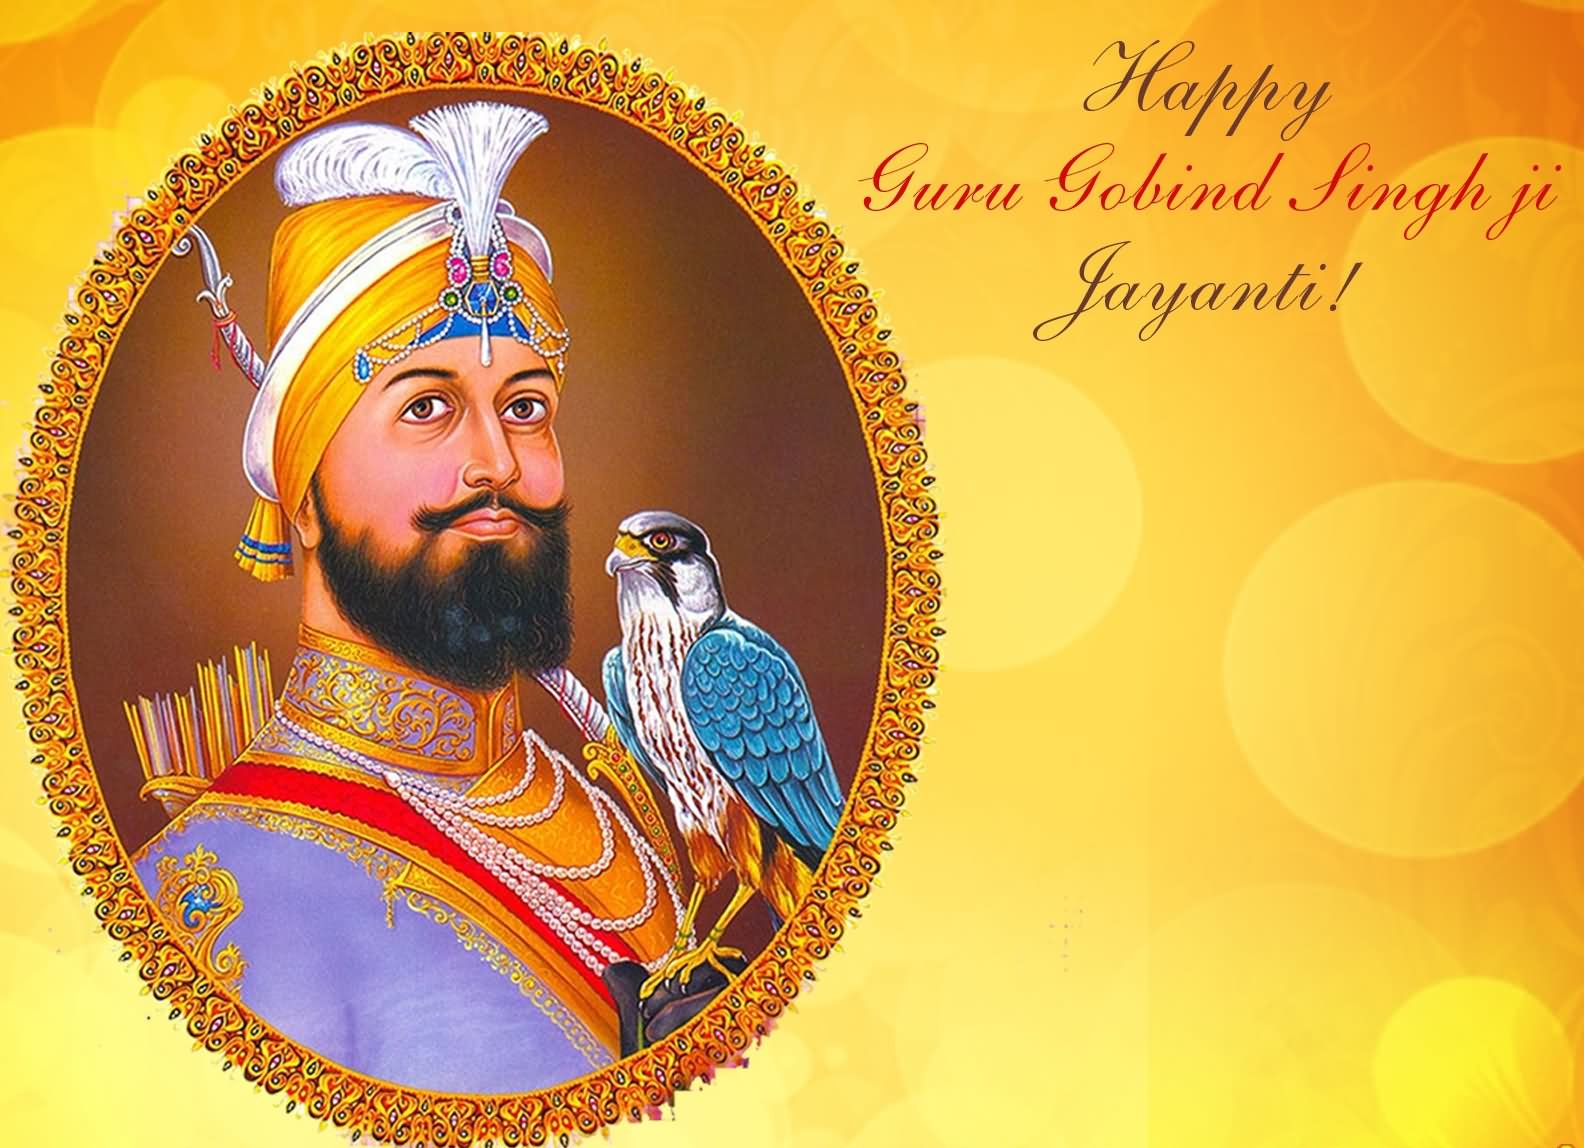 Happy Guru Gobind Singh Ji Jayanti Greetings